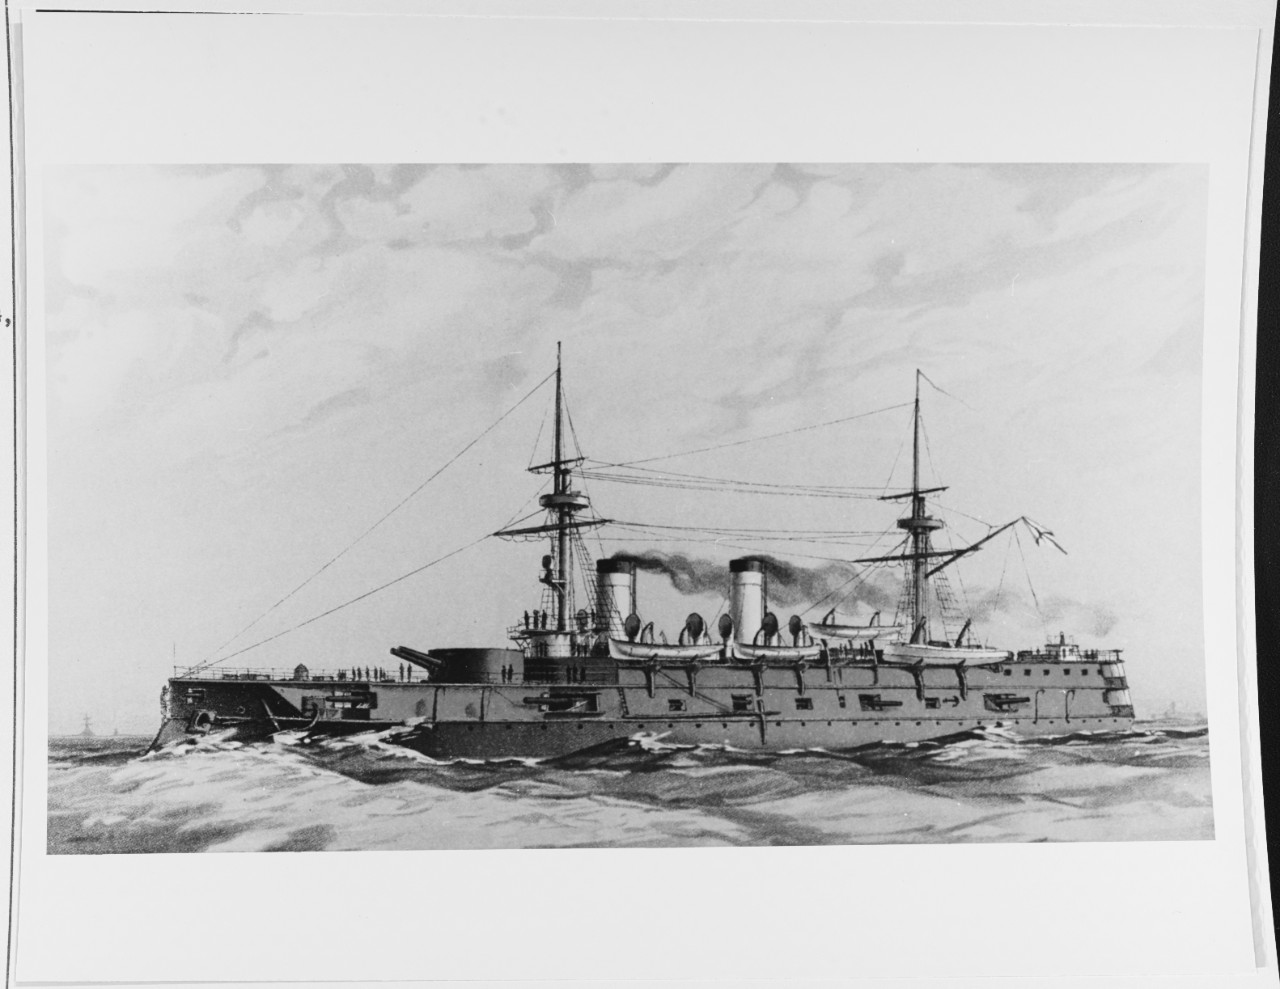 IMPERATOR NICOLAI I (Russian battleship, 1889)